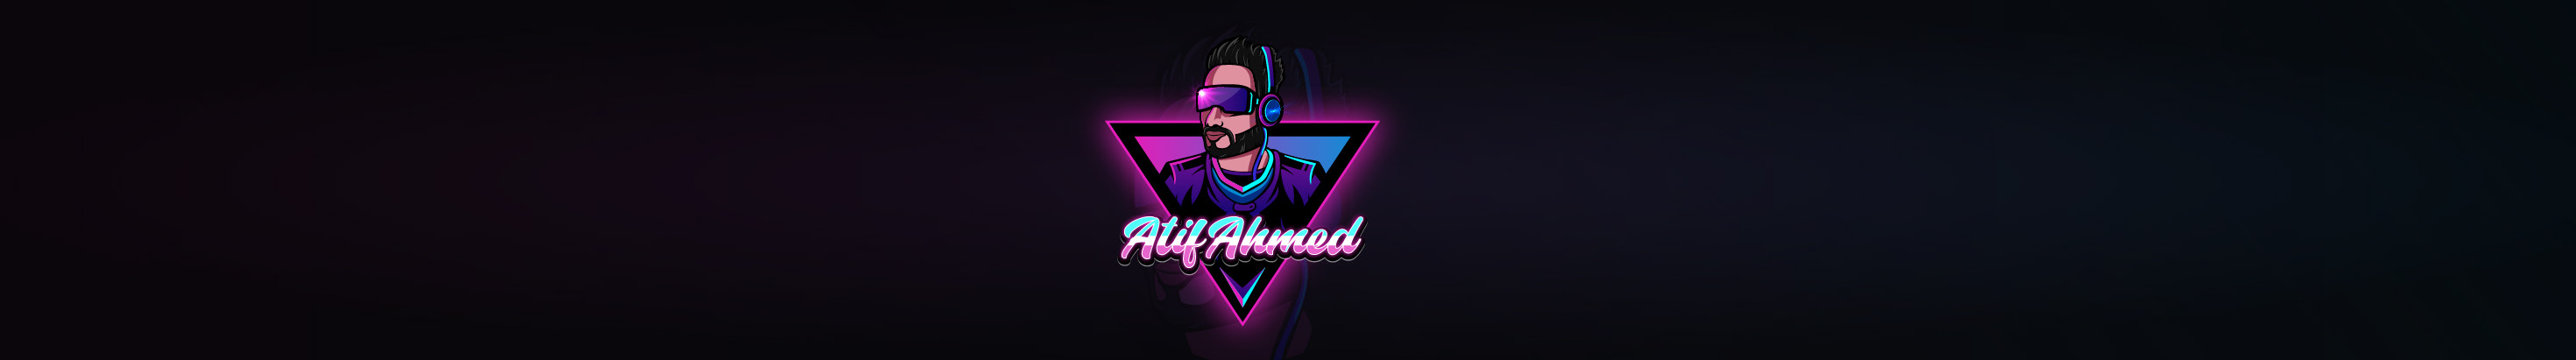 Bannière de profil de Atif Ahmed